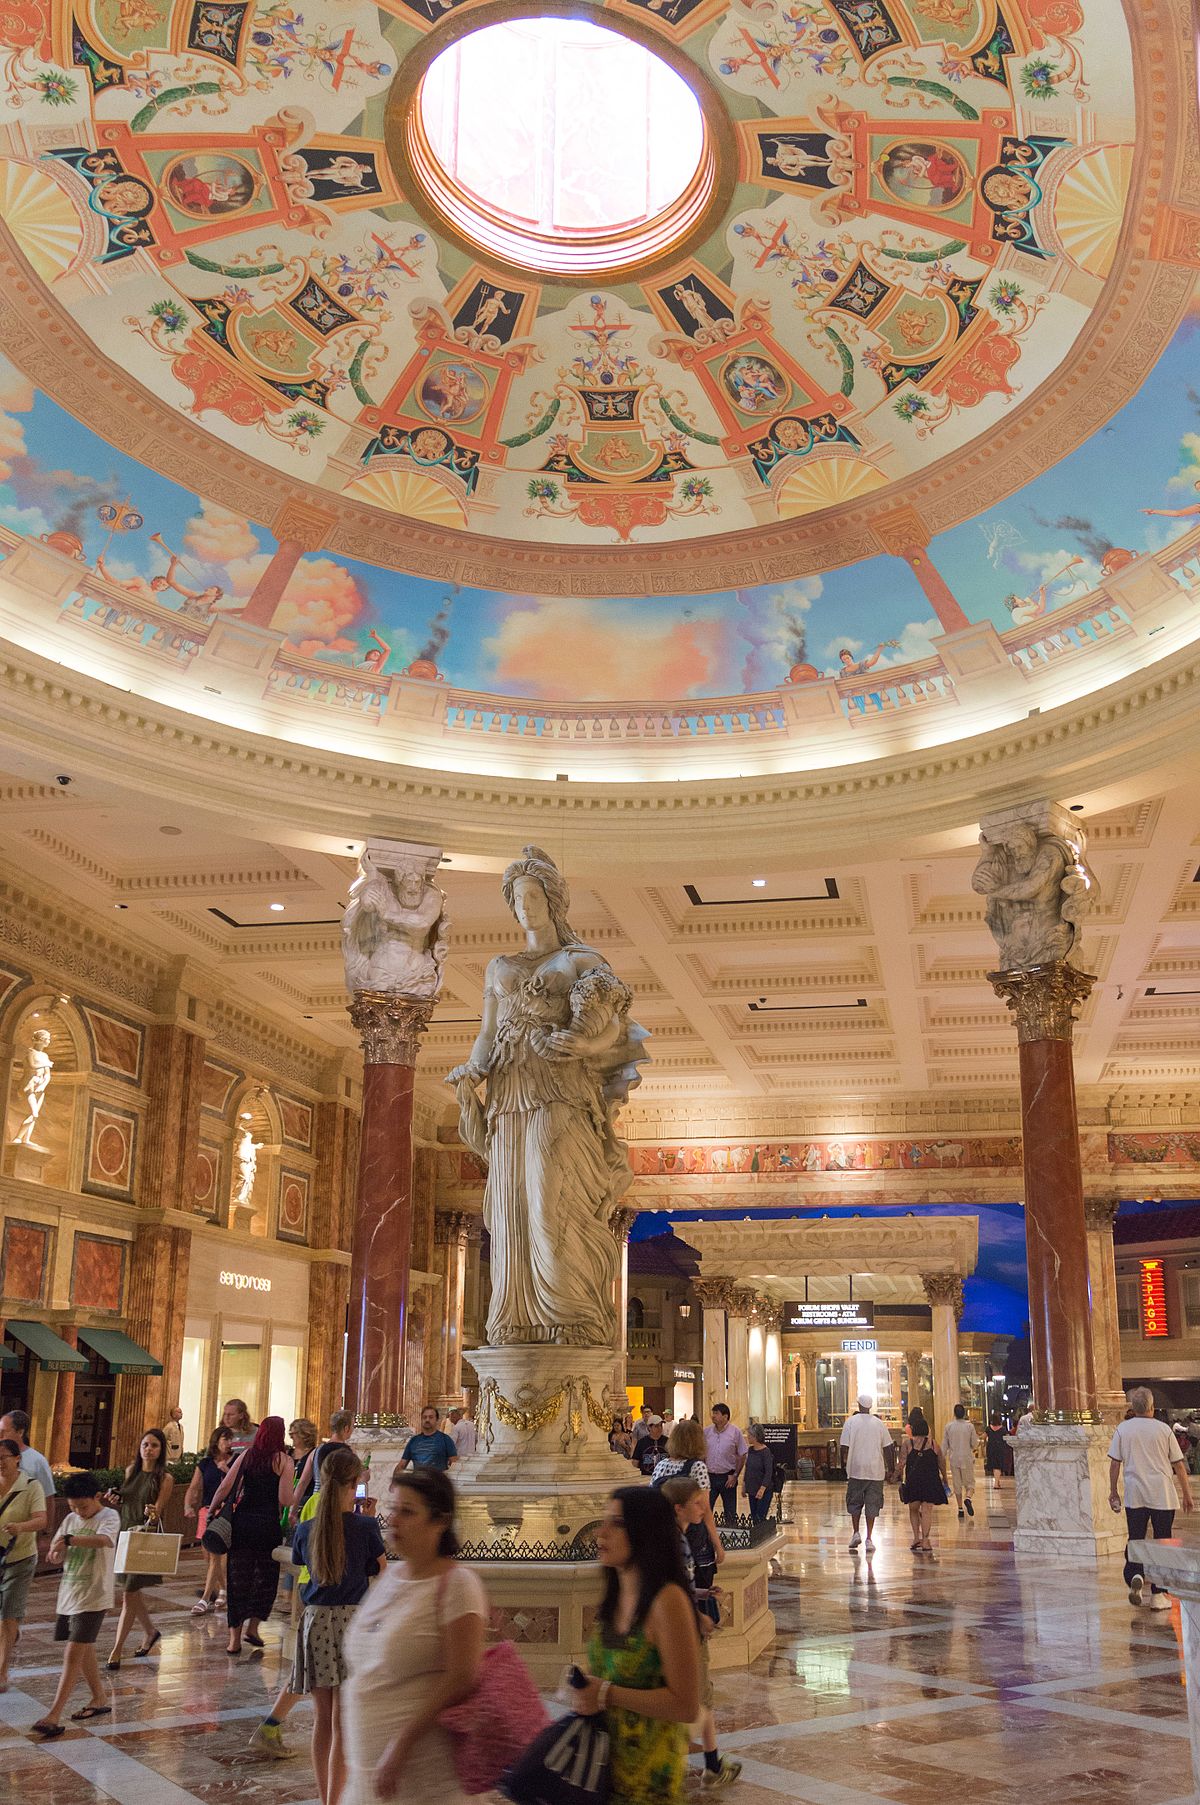 File:Caesars Palace Las Vegas. (39229935724).jpg - Wikimedia Commons